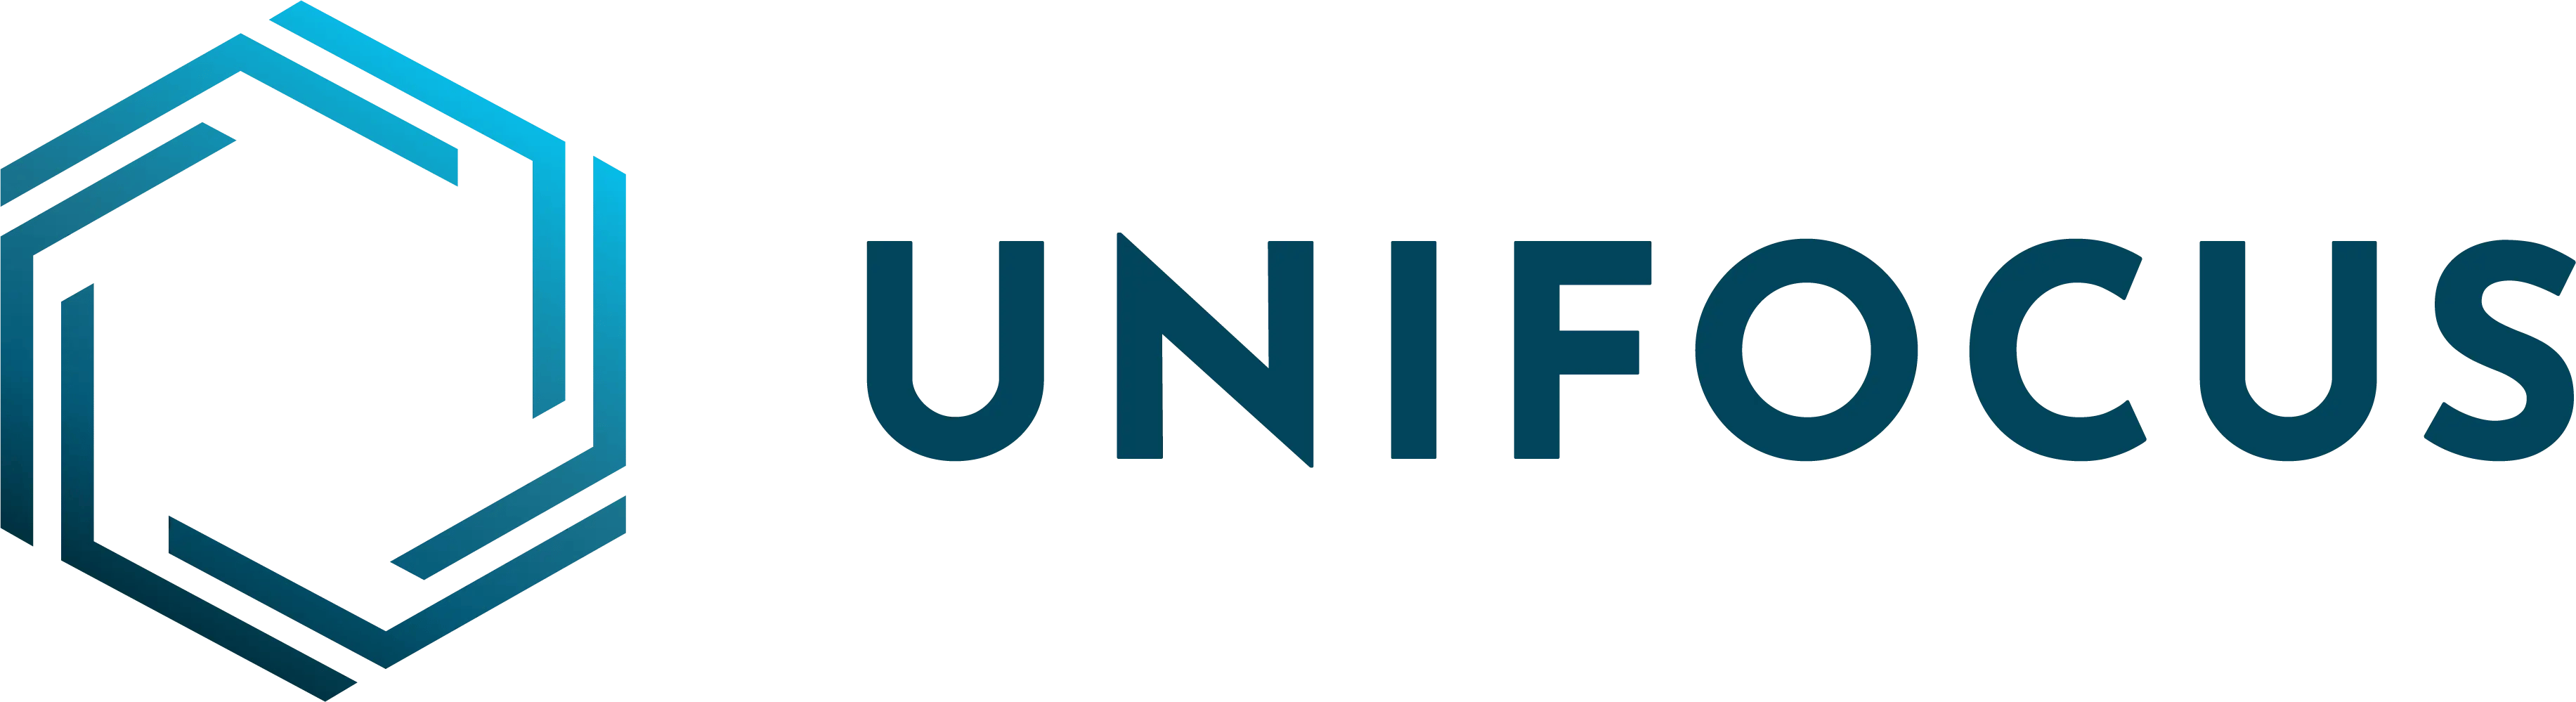 www.unifocus.comhs-fshubfsunifocus-logo